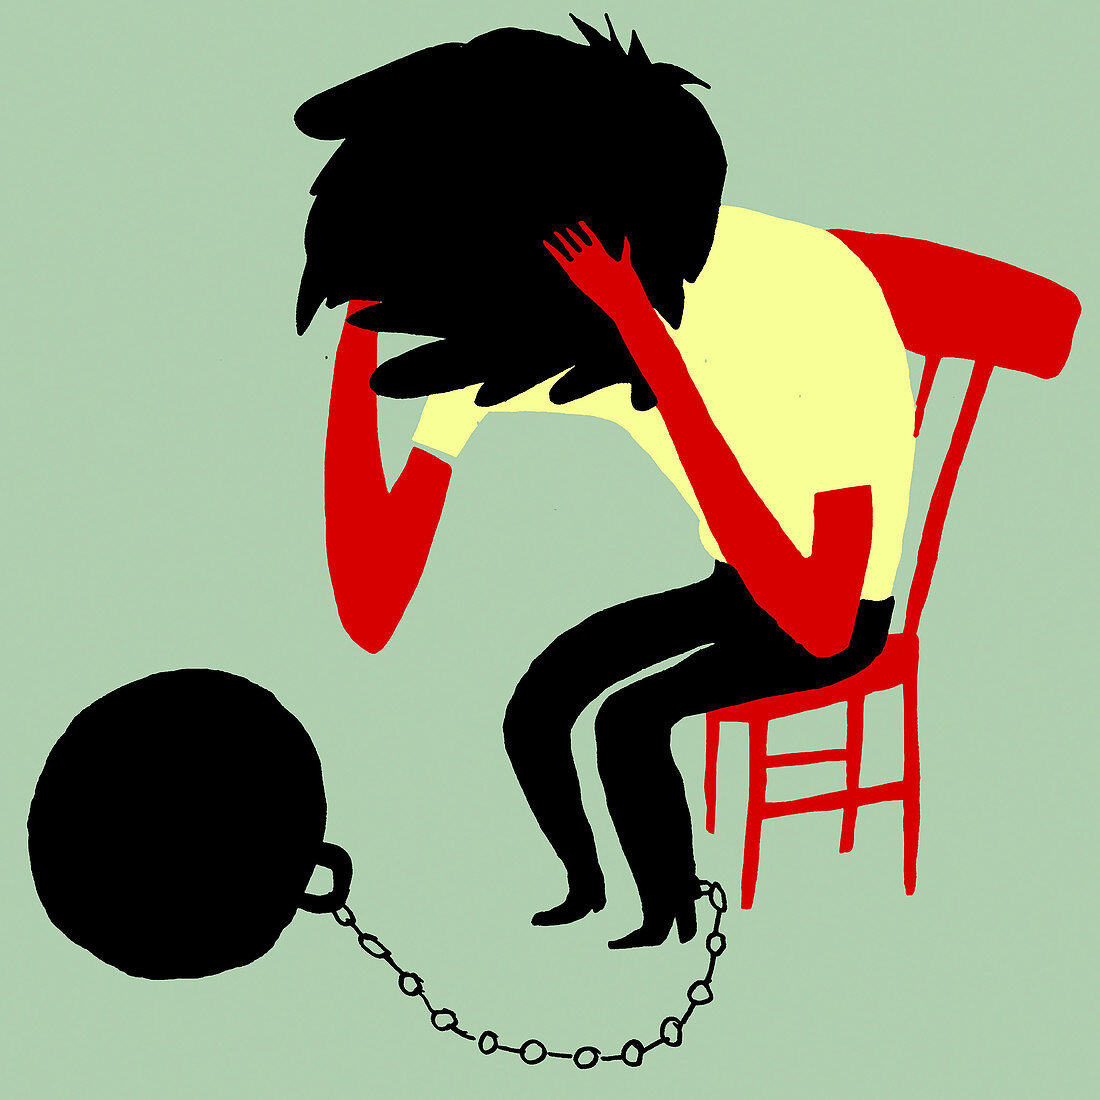 Trapped man, conceptual illustration